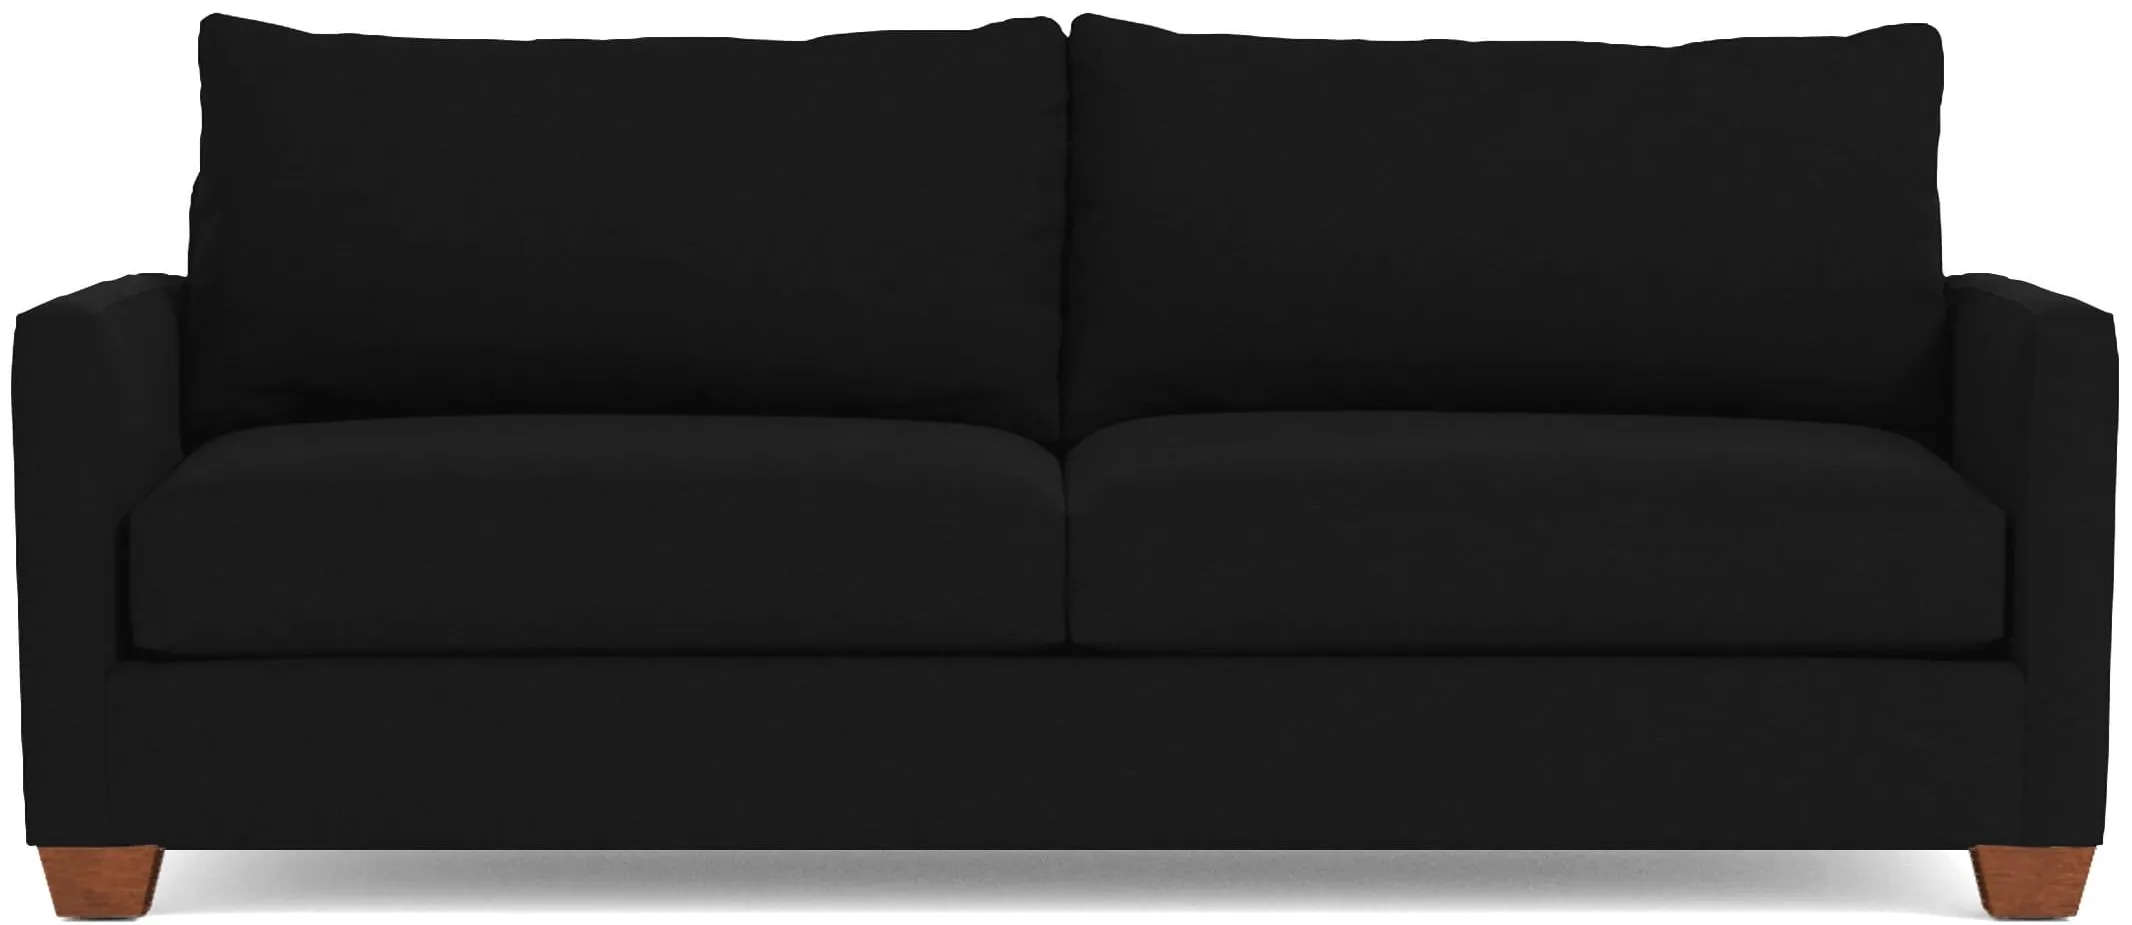 Tuxedo Queen Size Sleeper Sofa Bed